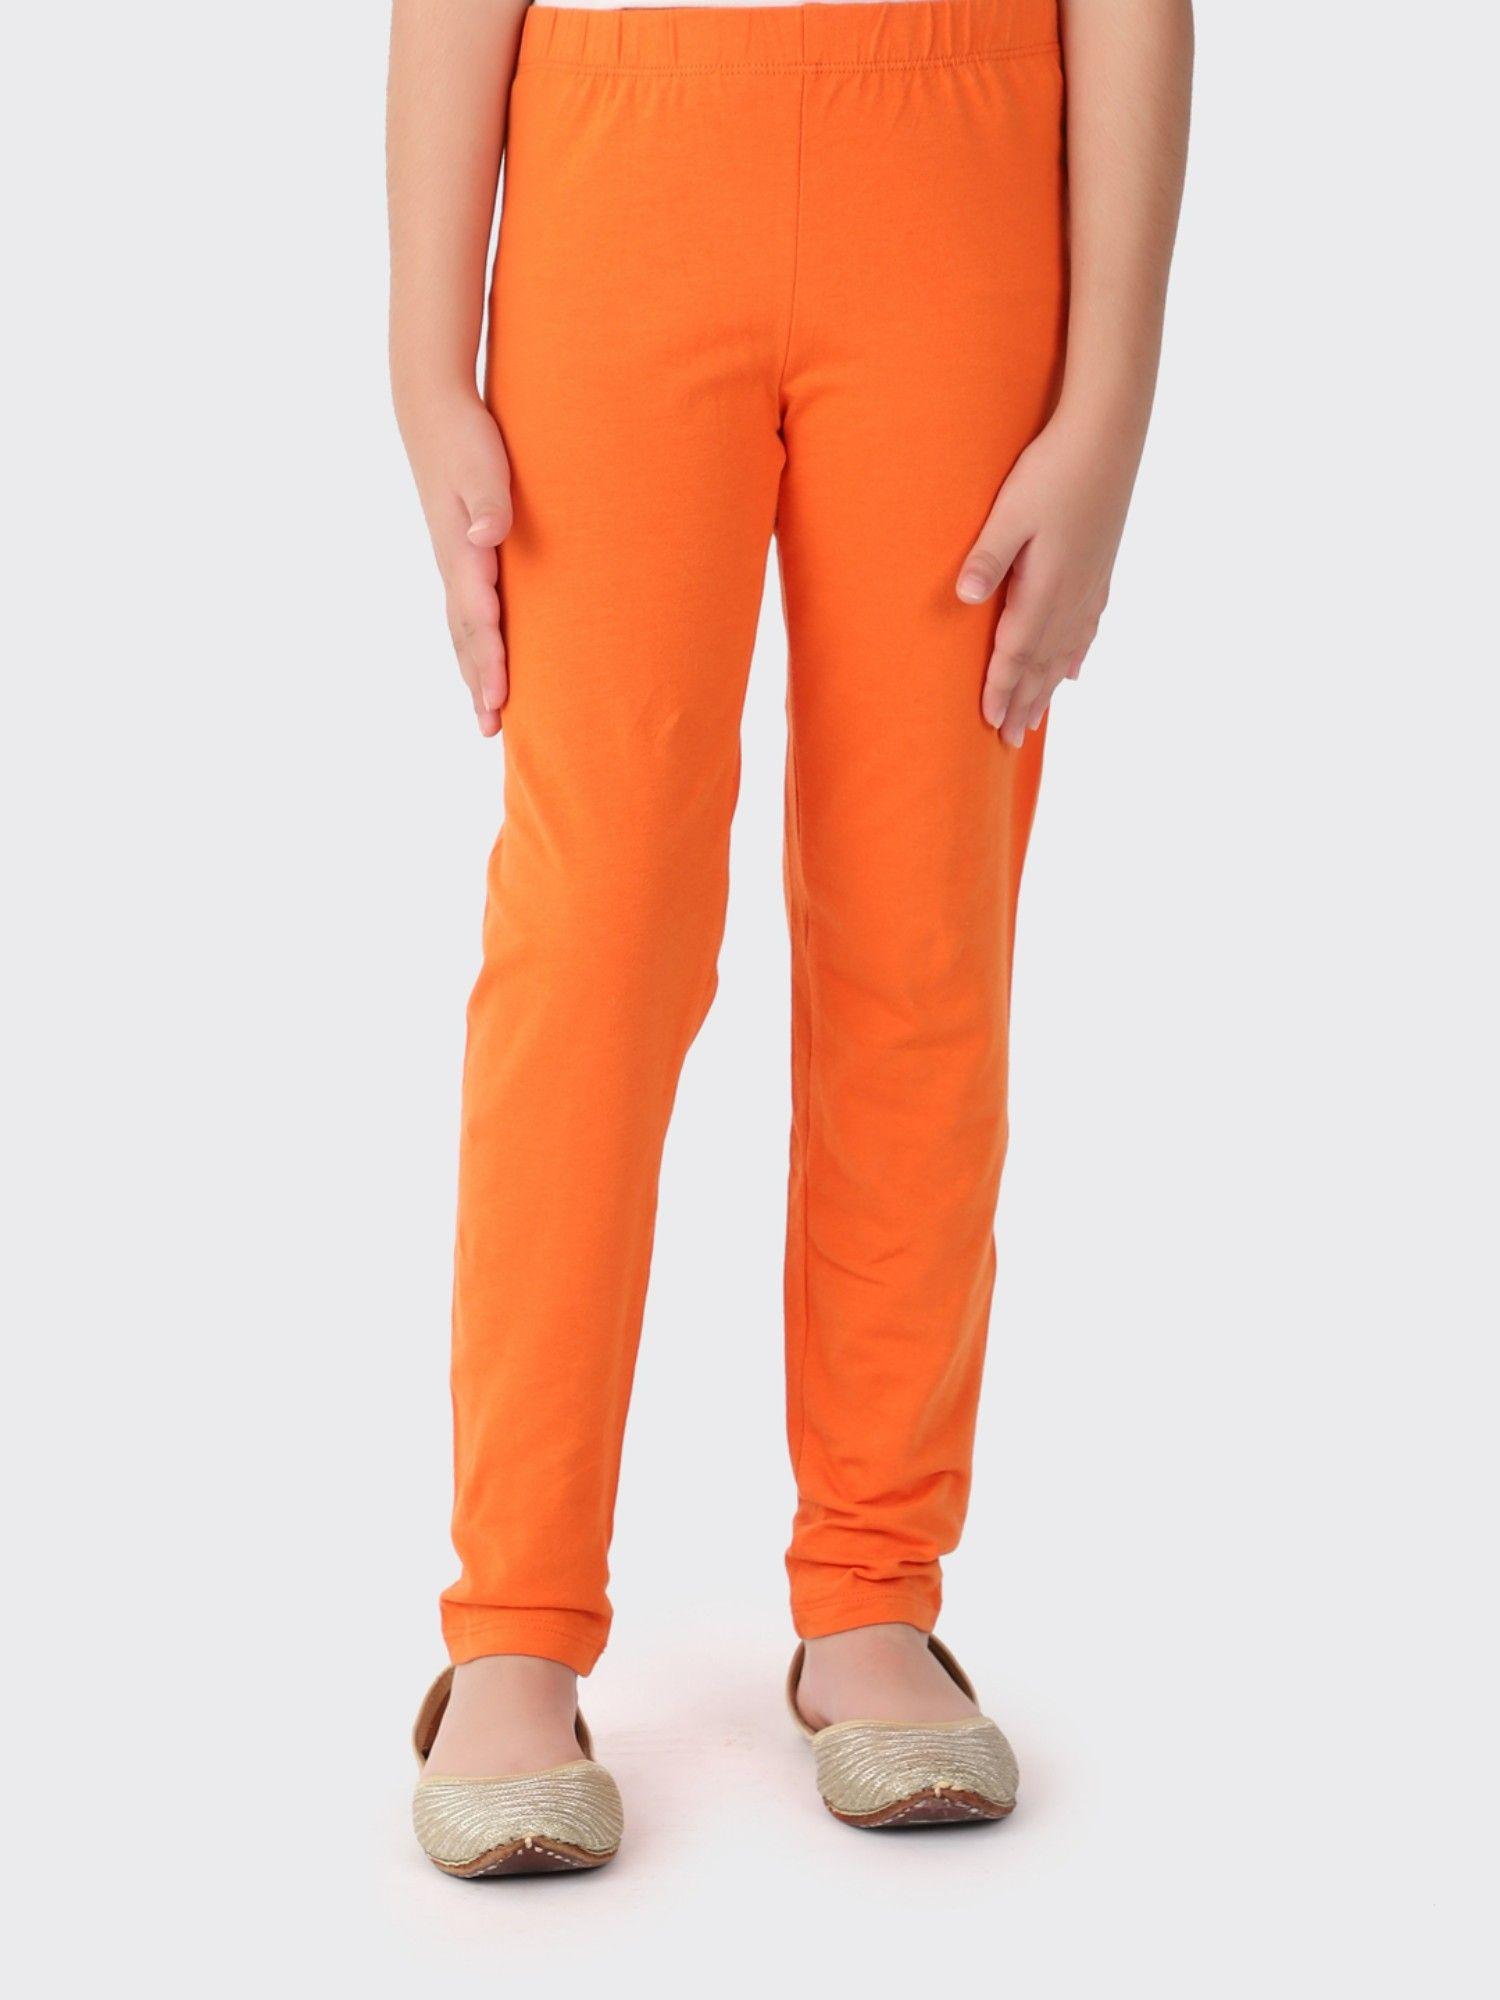 orange cotton blend legging